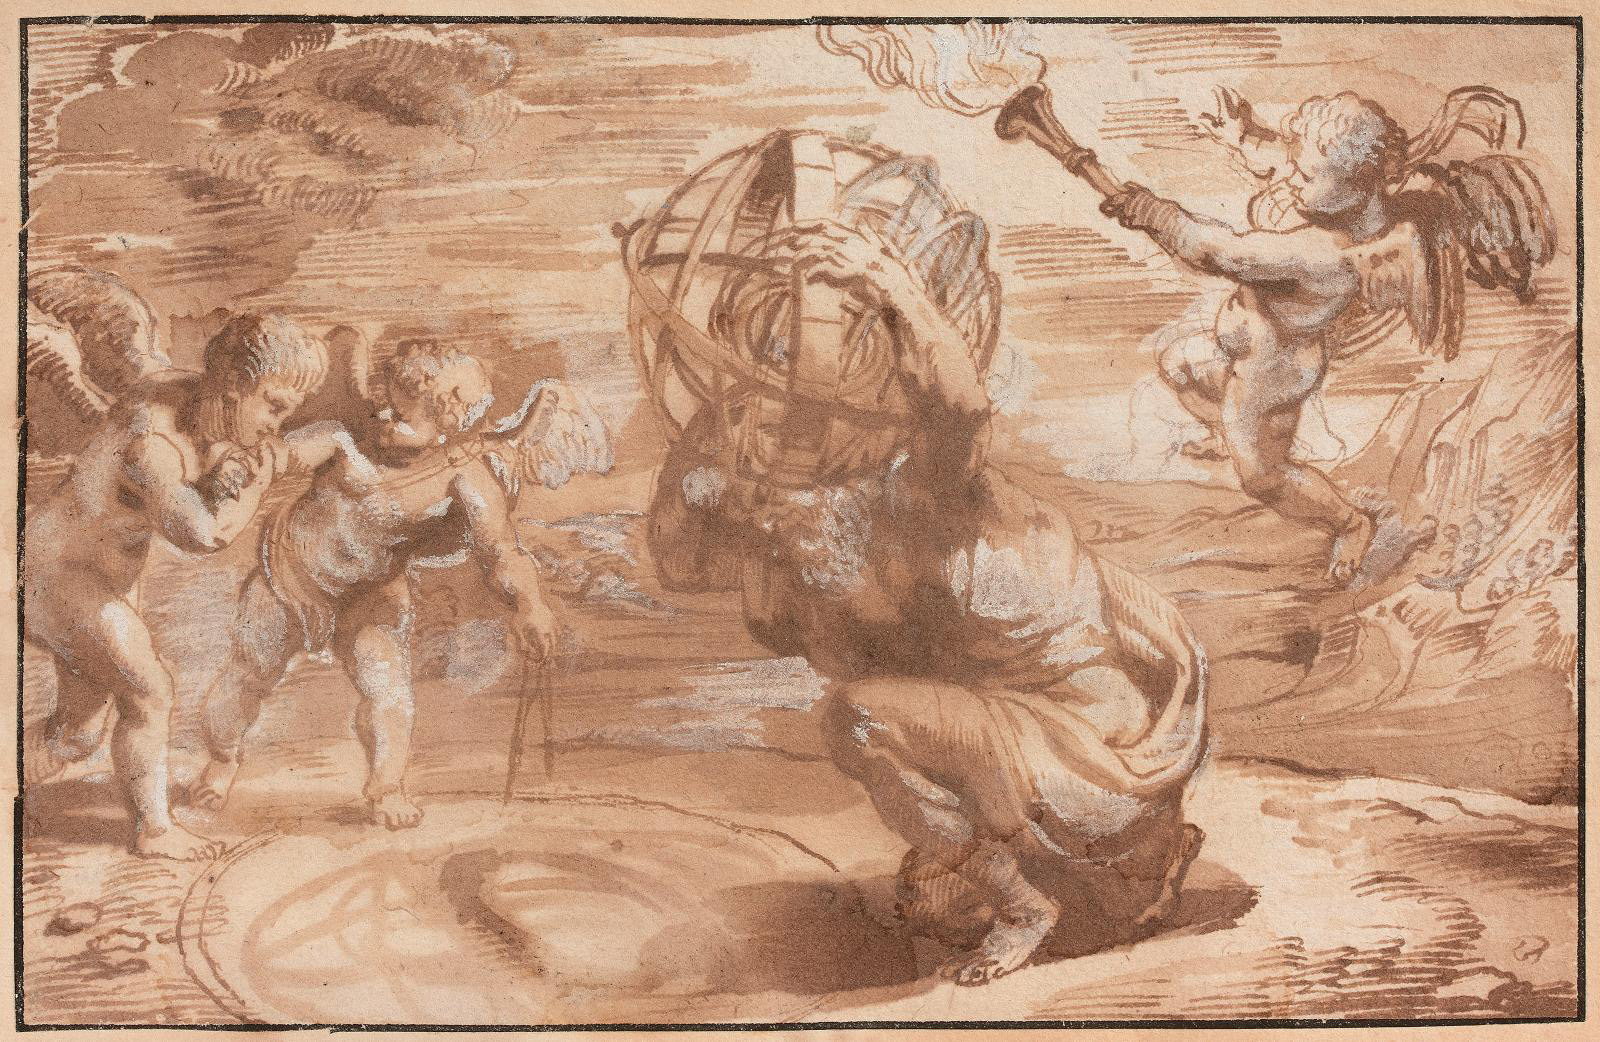 Rubens: Illustrator of Science